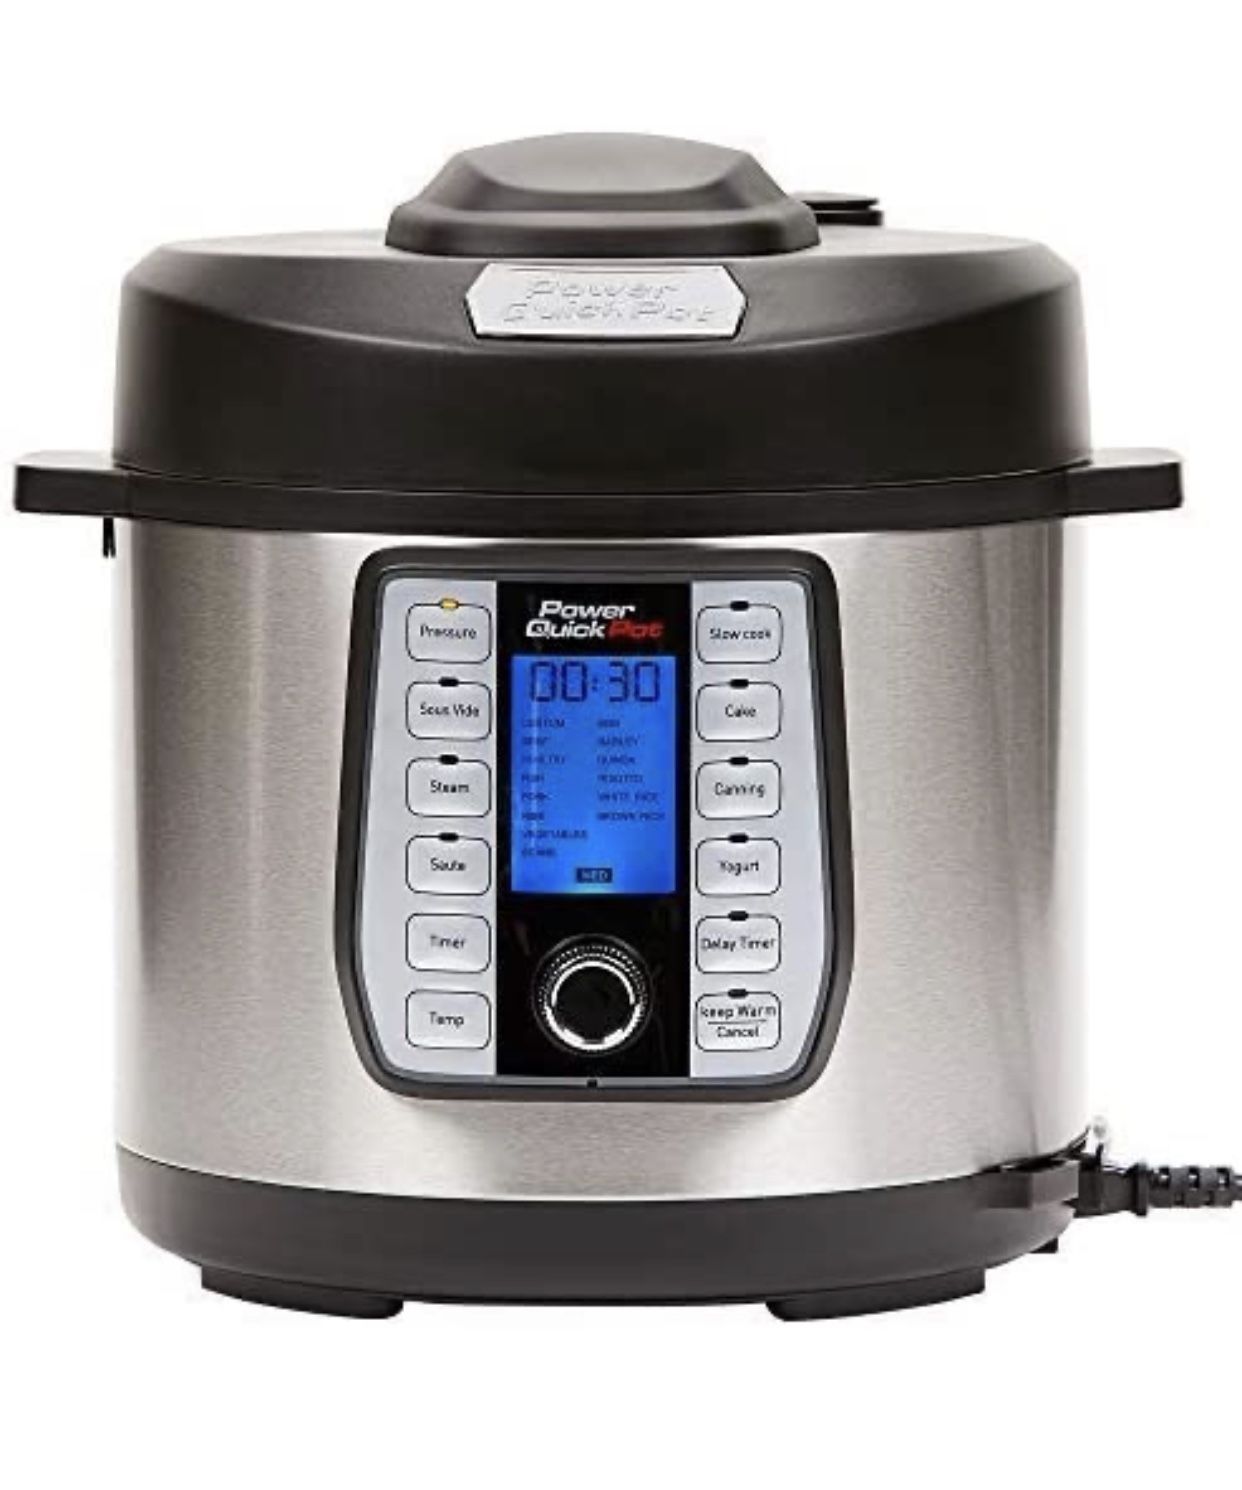 TRISTAR Power Quick Pot Deluxe 8-quart Pressure Cooker